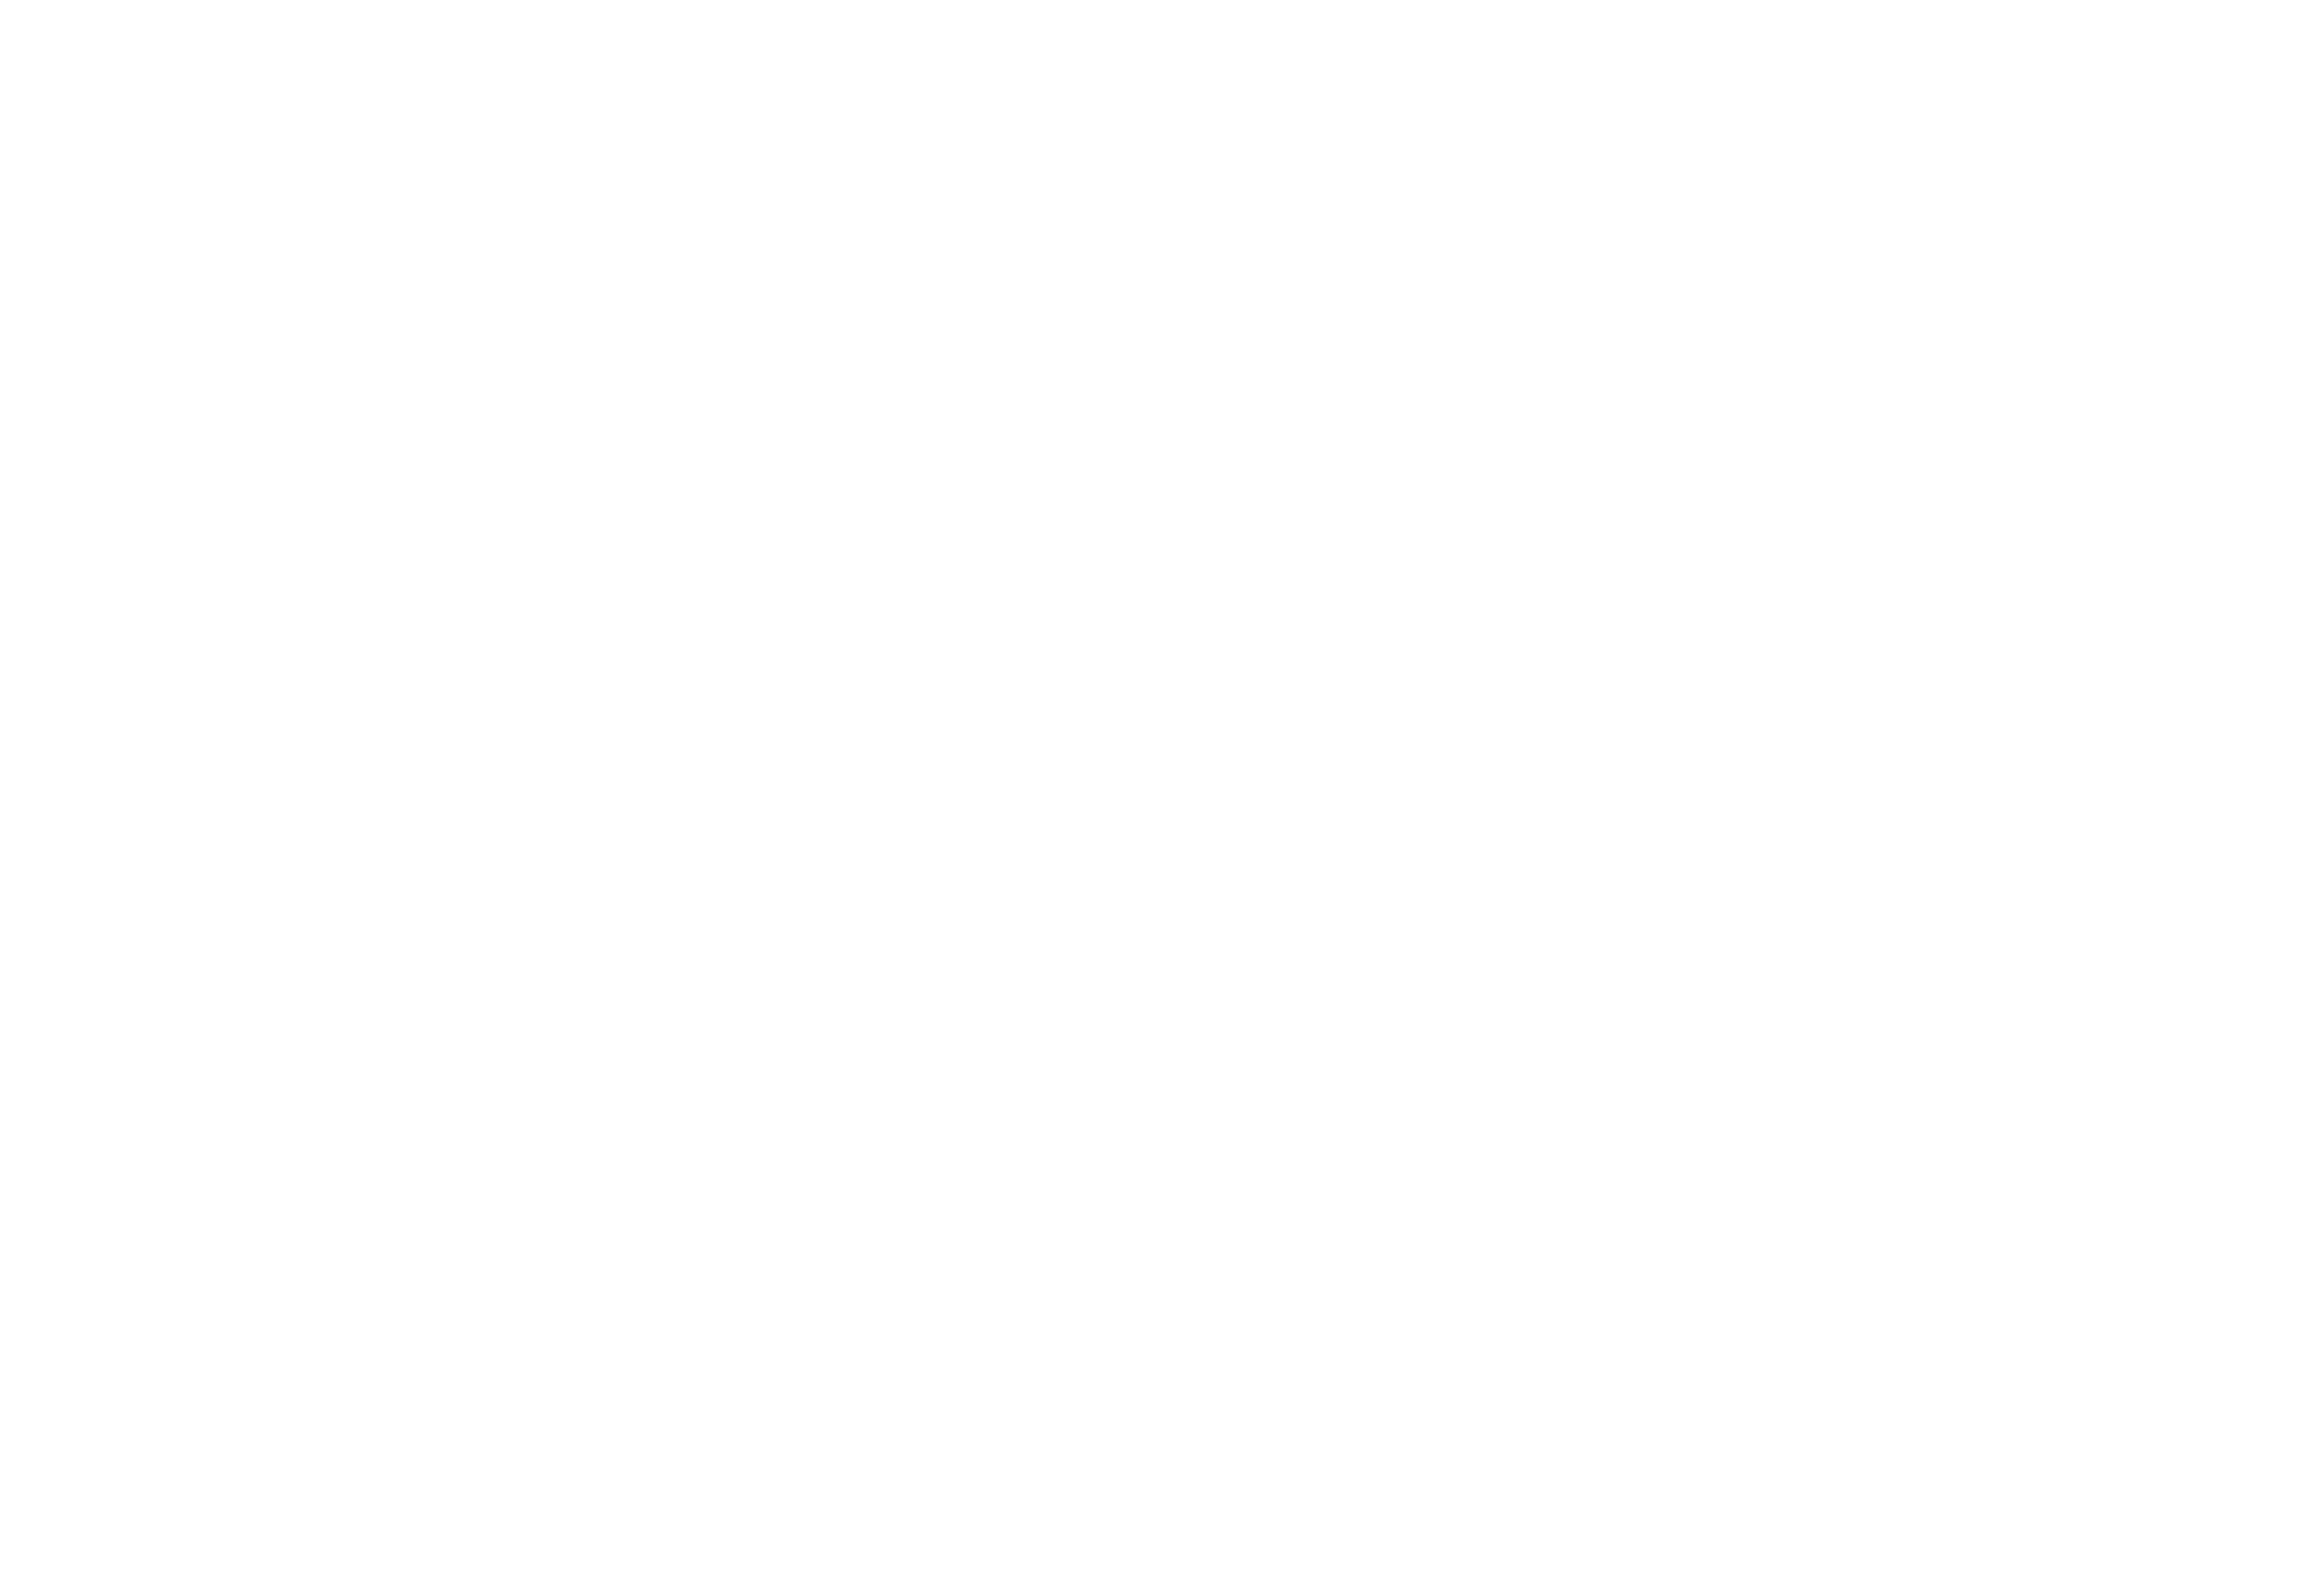 White Celebrate A Life 2022 logo with star motif